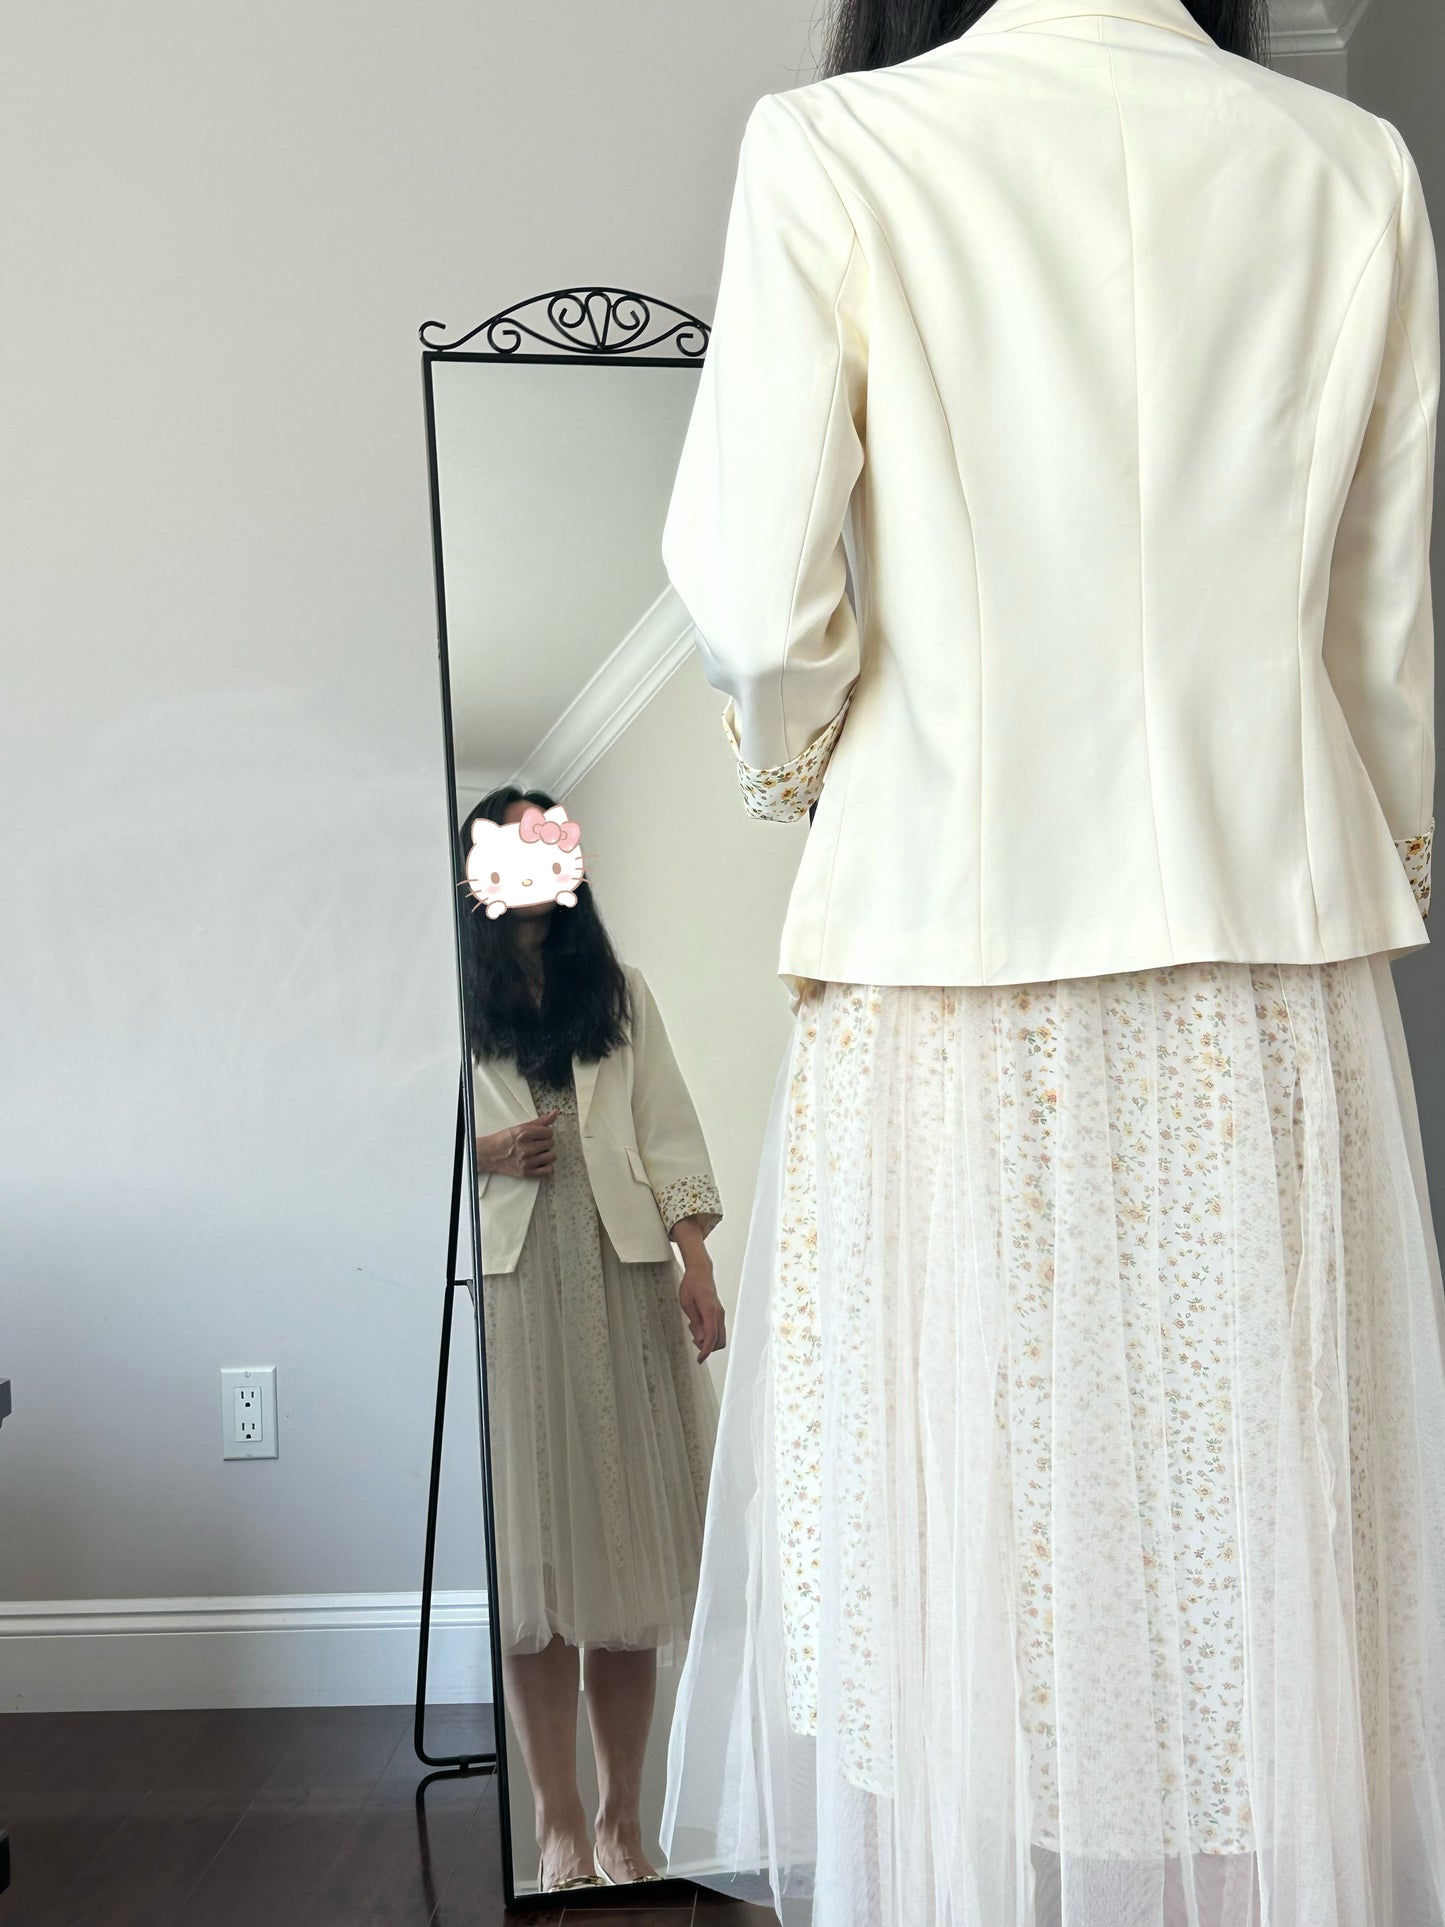 Elegant White/Black Dress Outfit